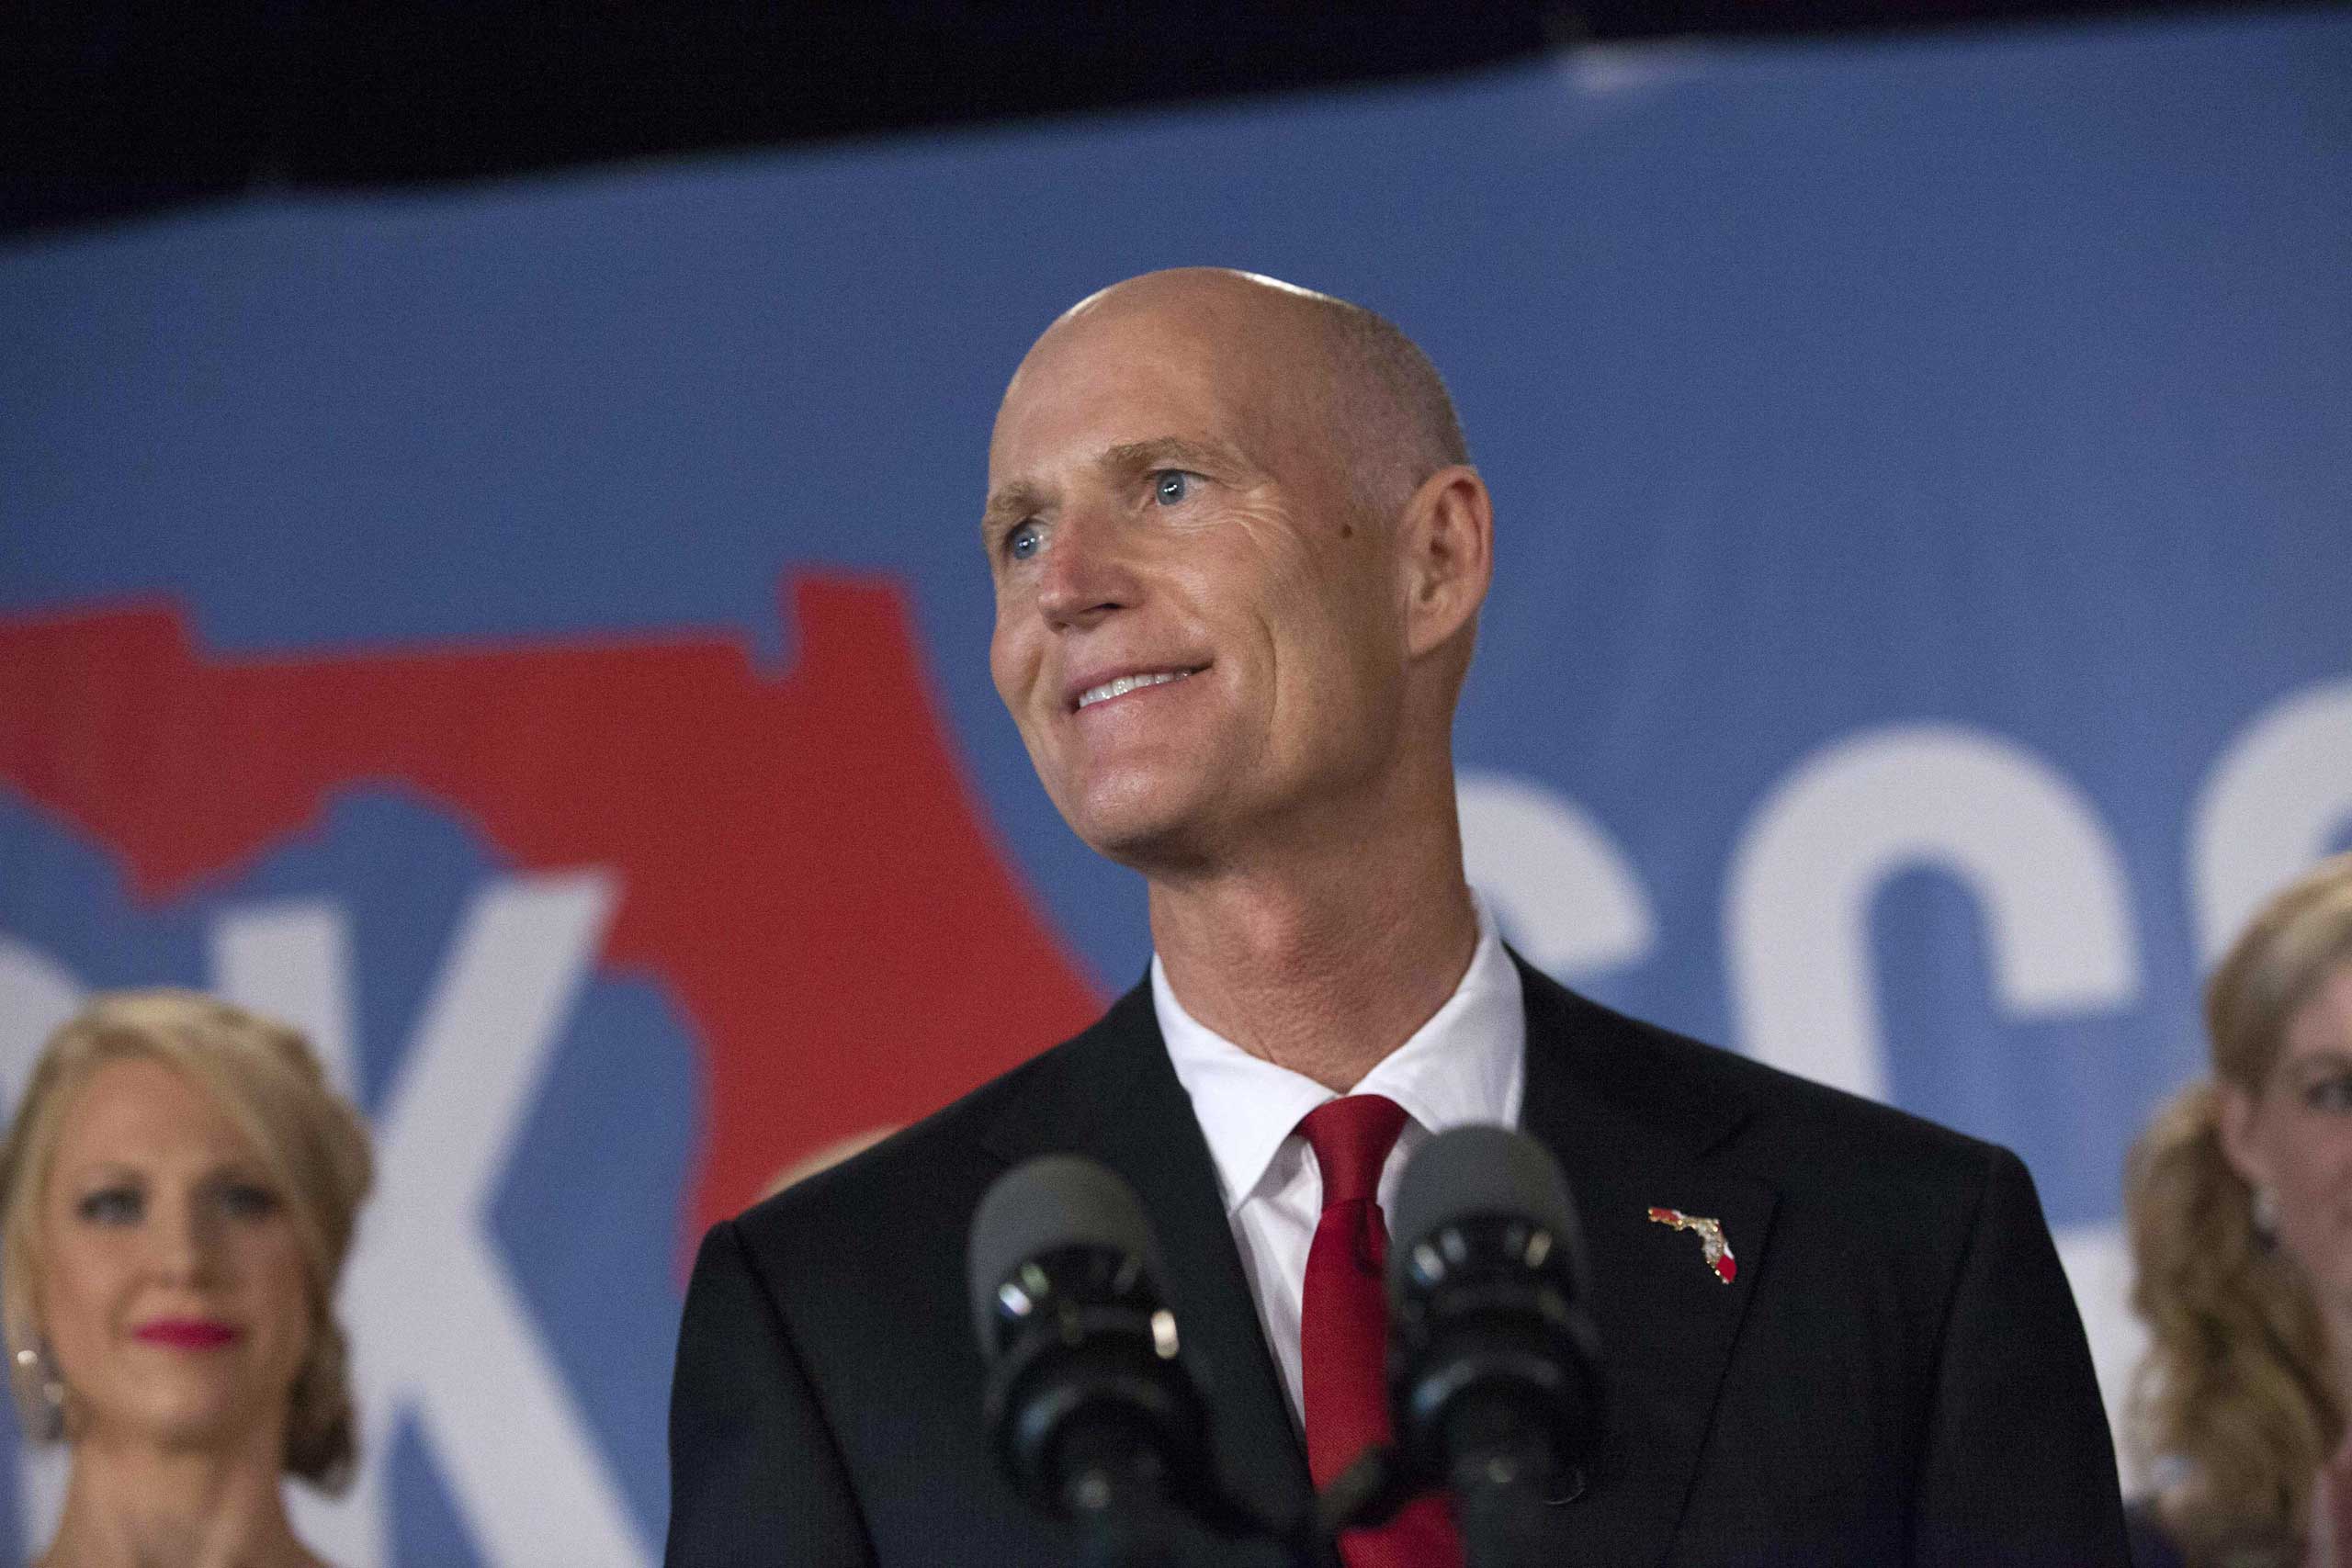 Florida Rep. Gov. Rick Scott gives his victory speech Nov. 4, 2014 in Bonita Springs, Florida. (Erik Kellar—Getty Images)